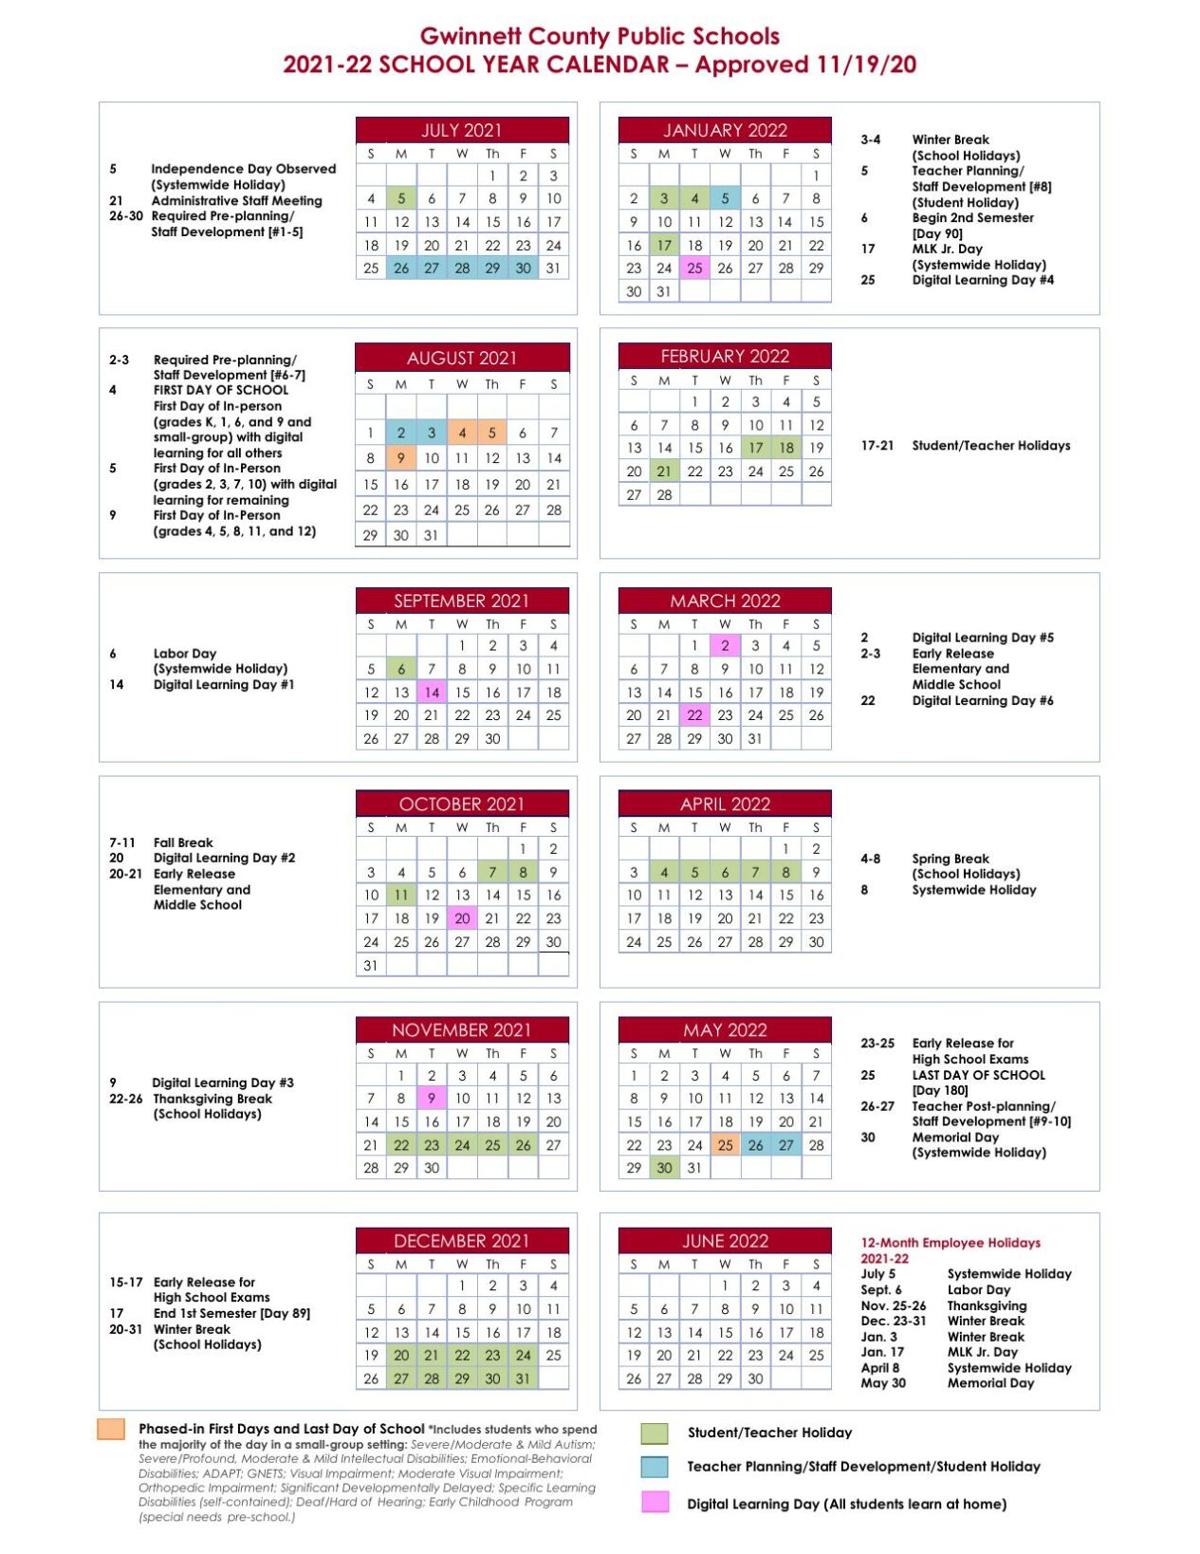 Delaware State University Academic Calendar 2022 2023 Gwinnett County Public Schools' 2021-2022 School Year Calendar | |  Gwinnettdailypost.com